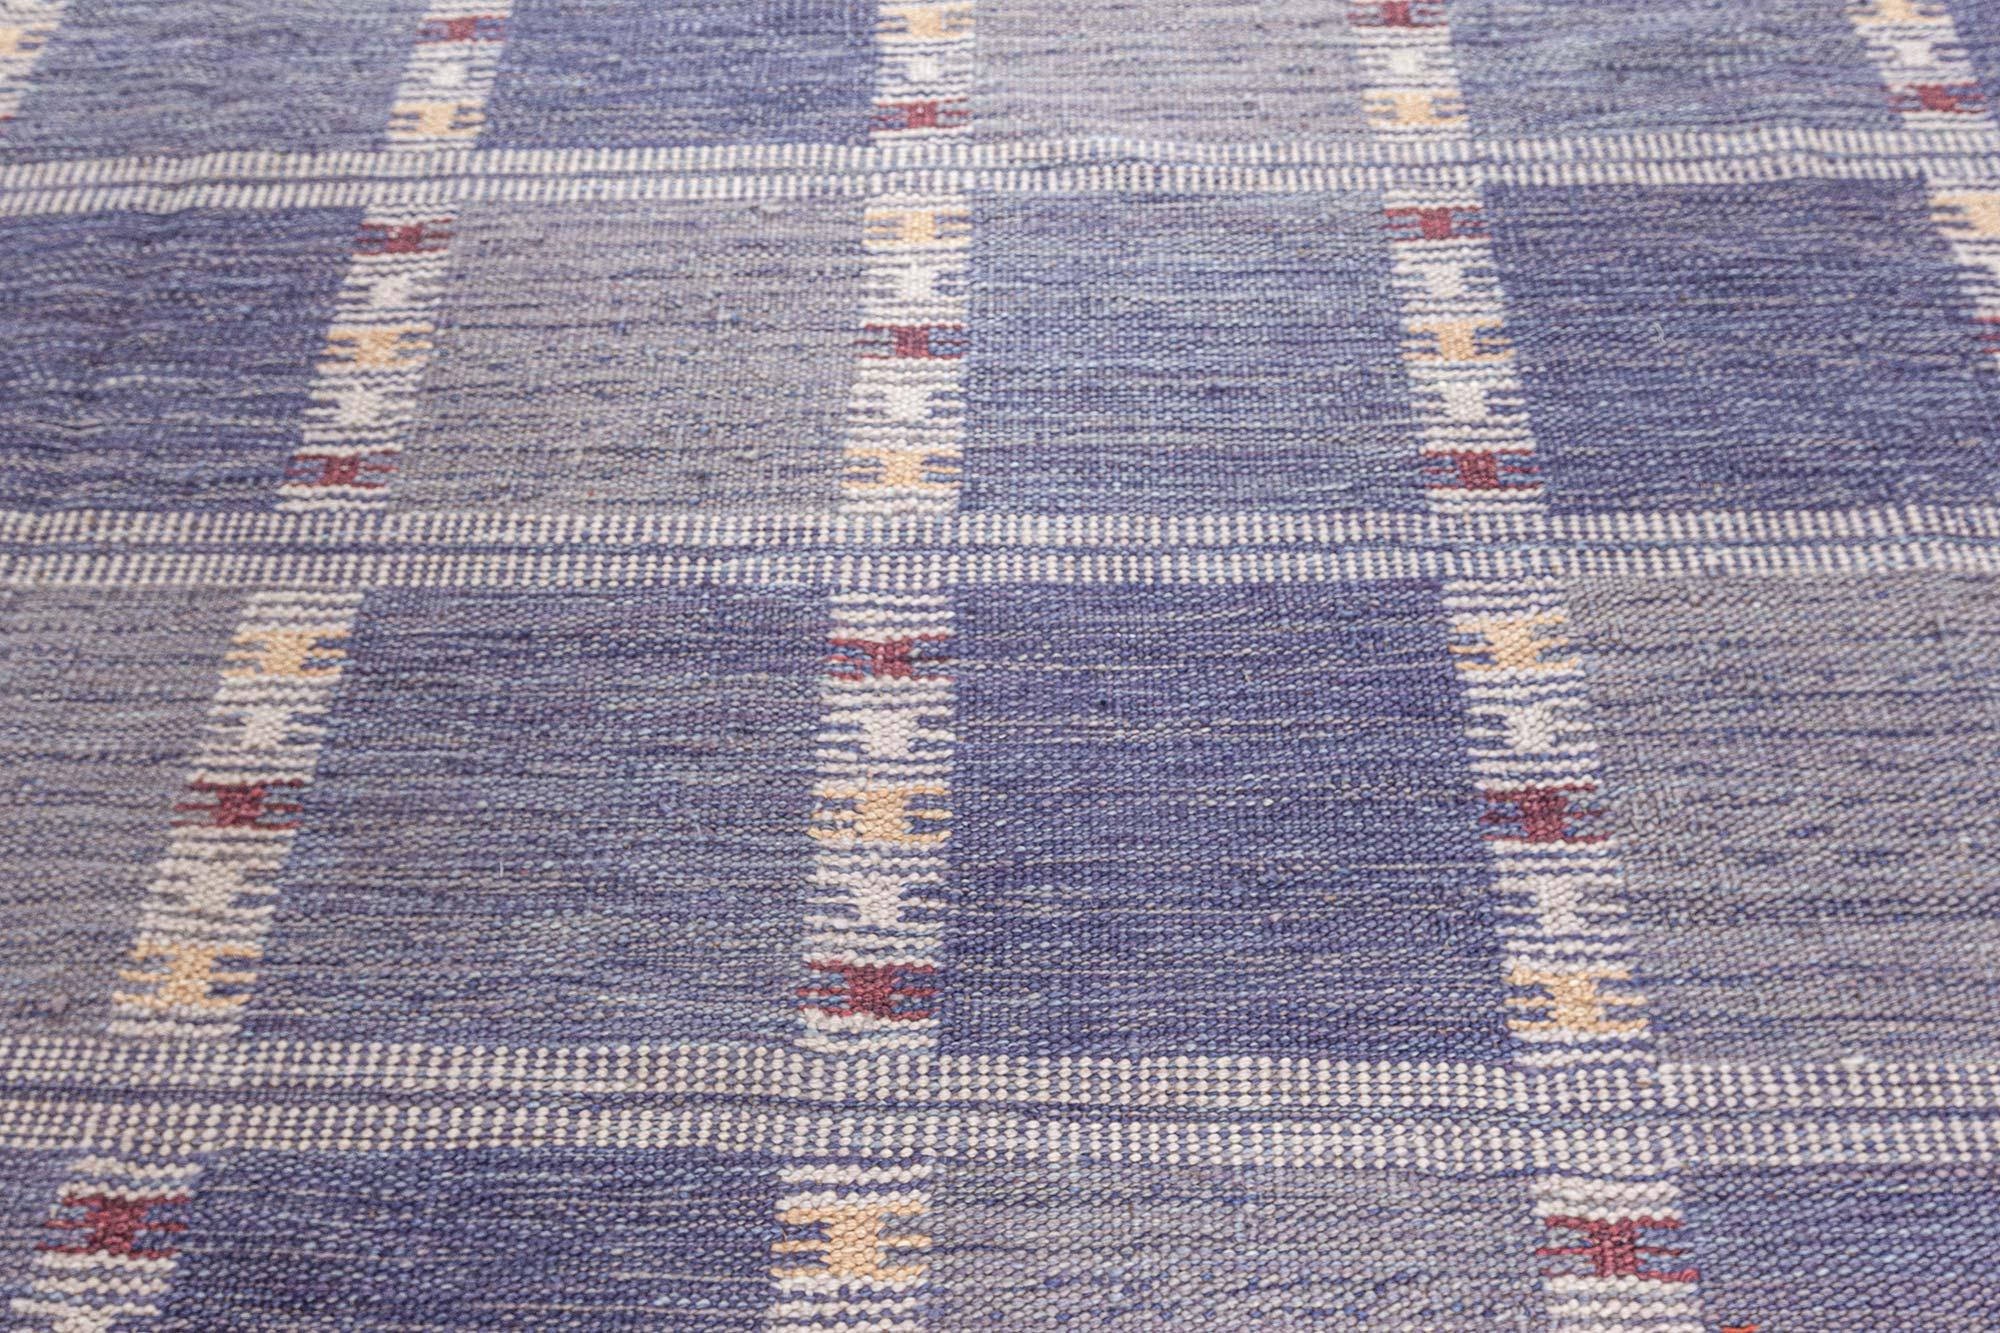 Extra large Swedish flatweave wool rug in Shades of Violet by Doris Leslie Blau
Size: 12'0